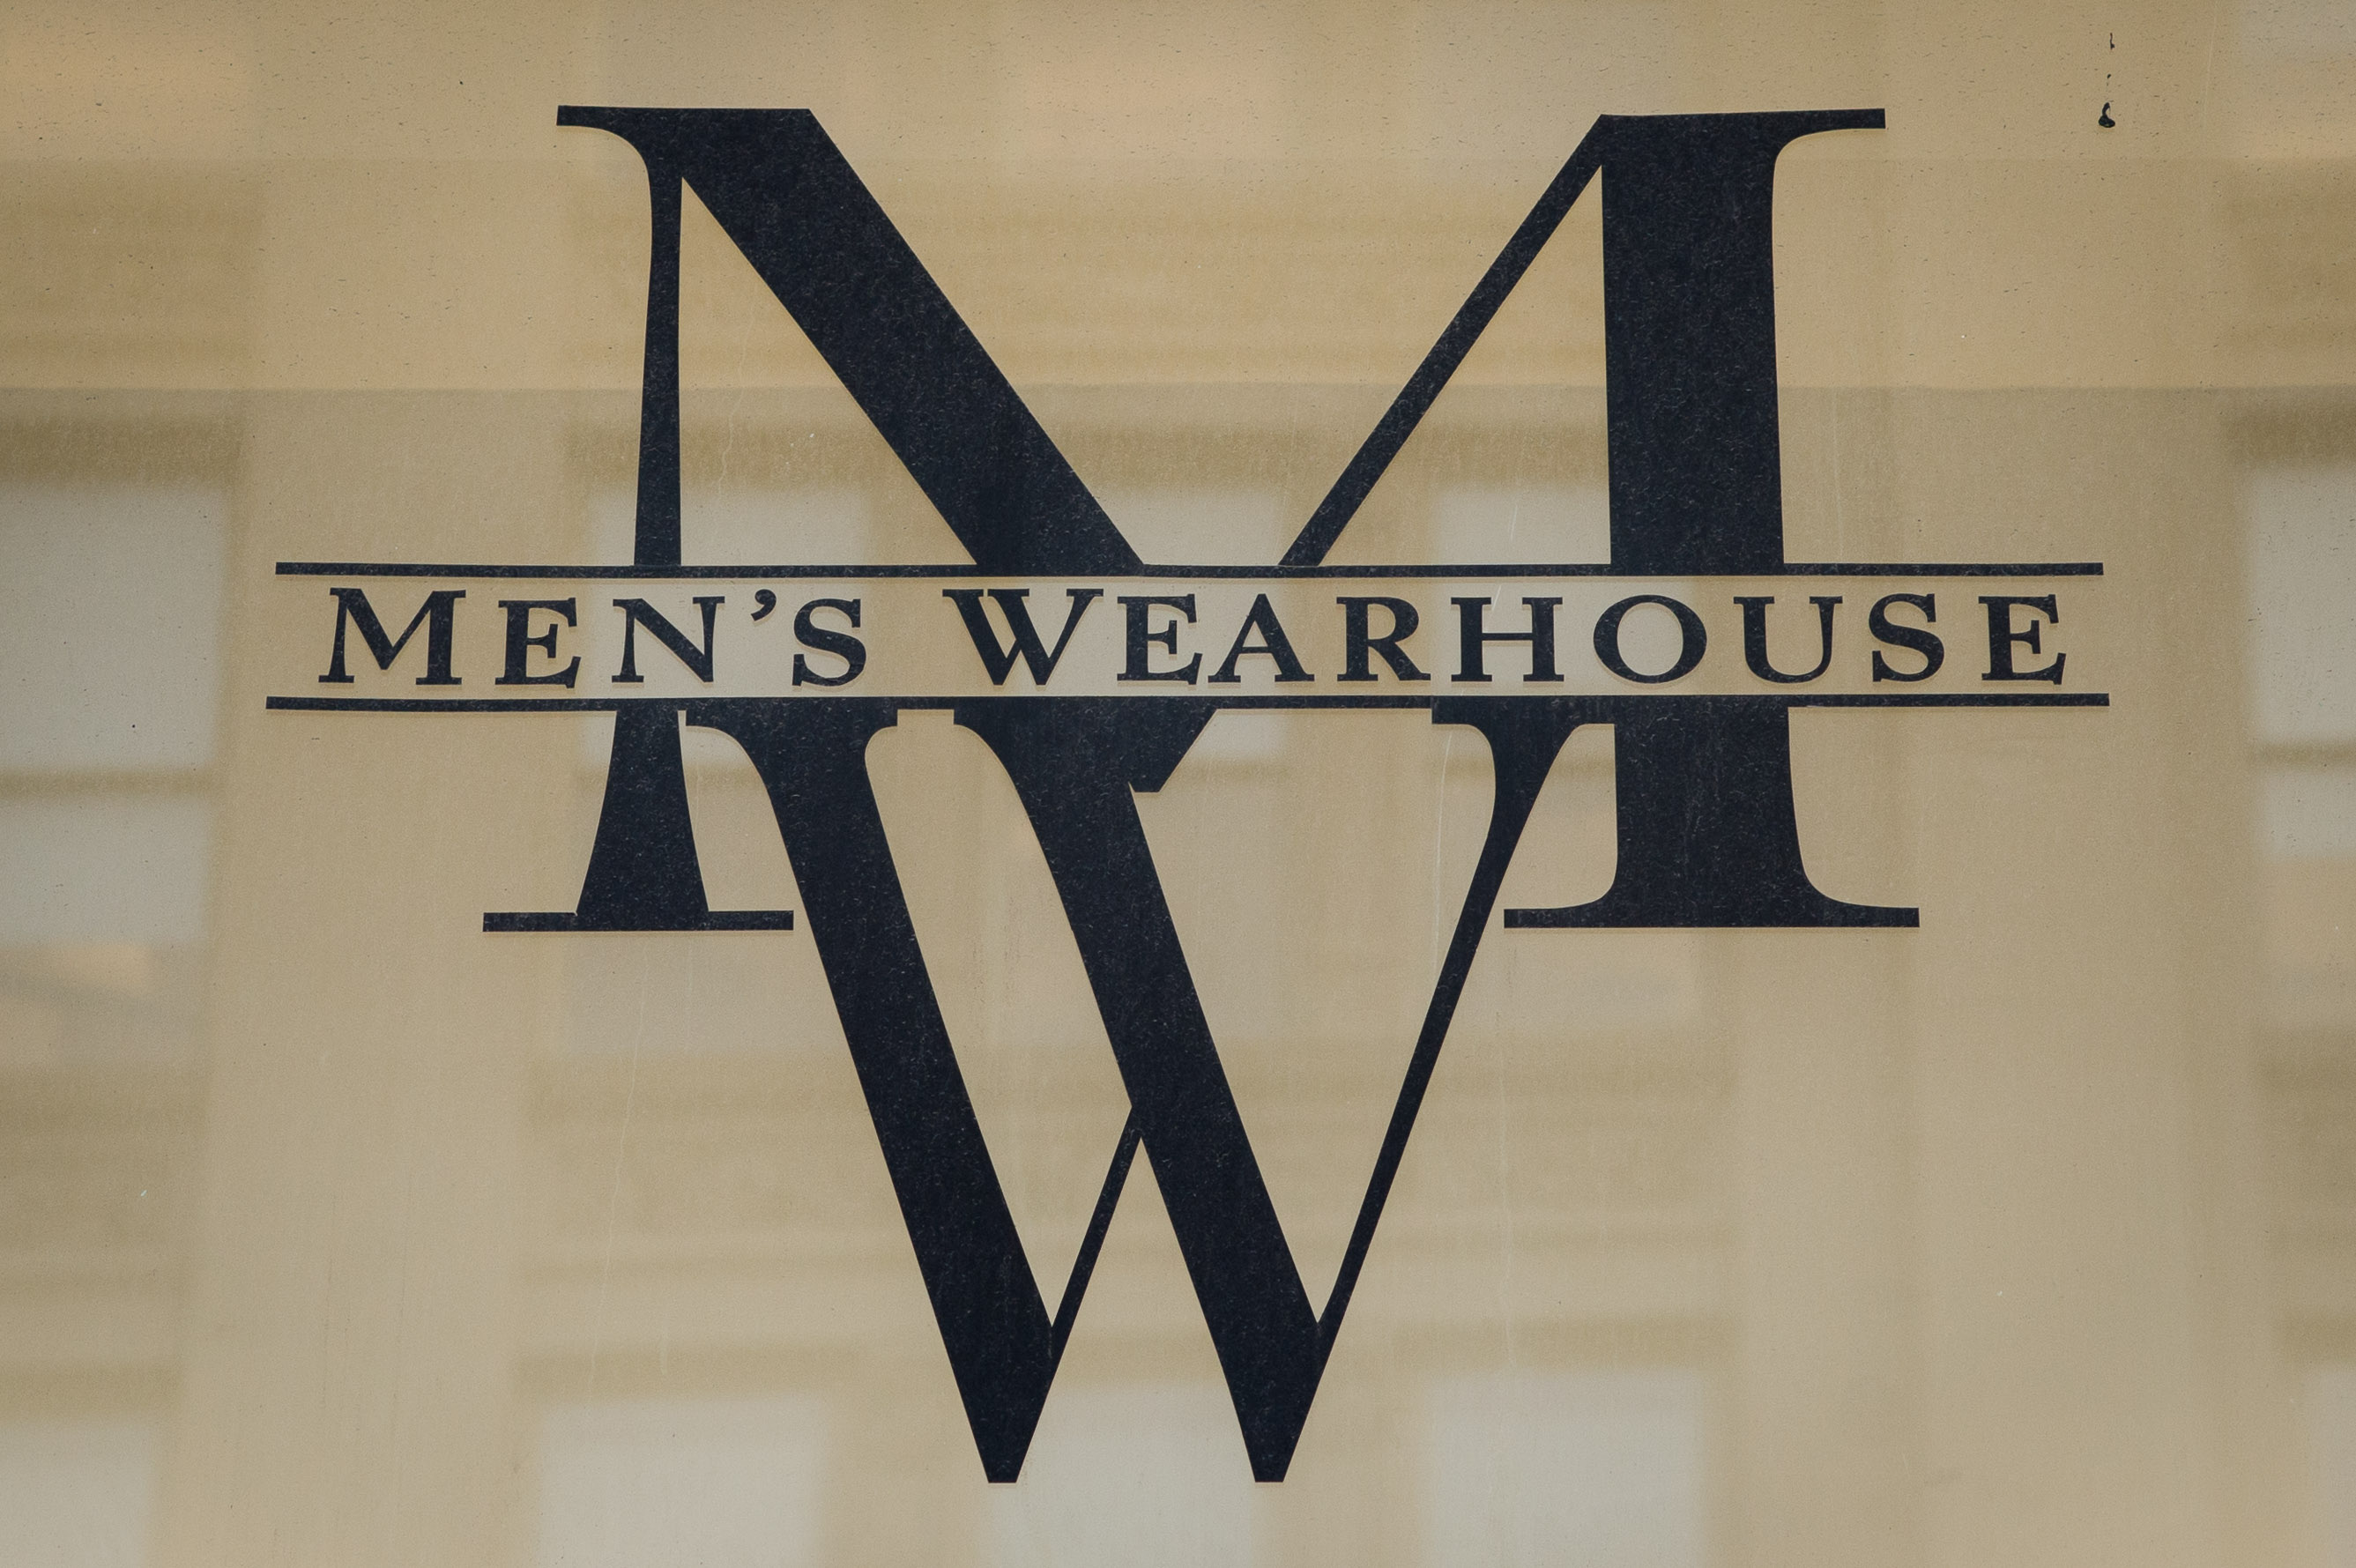 Men's Wearhouse Adopts New Look as Hunter Instead of Target